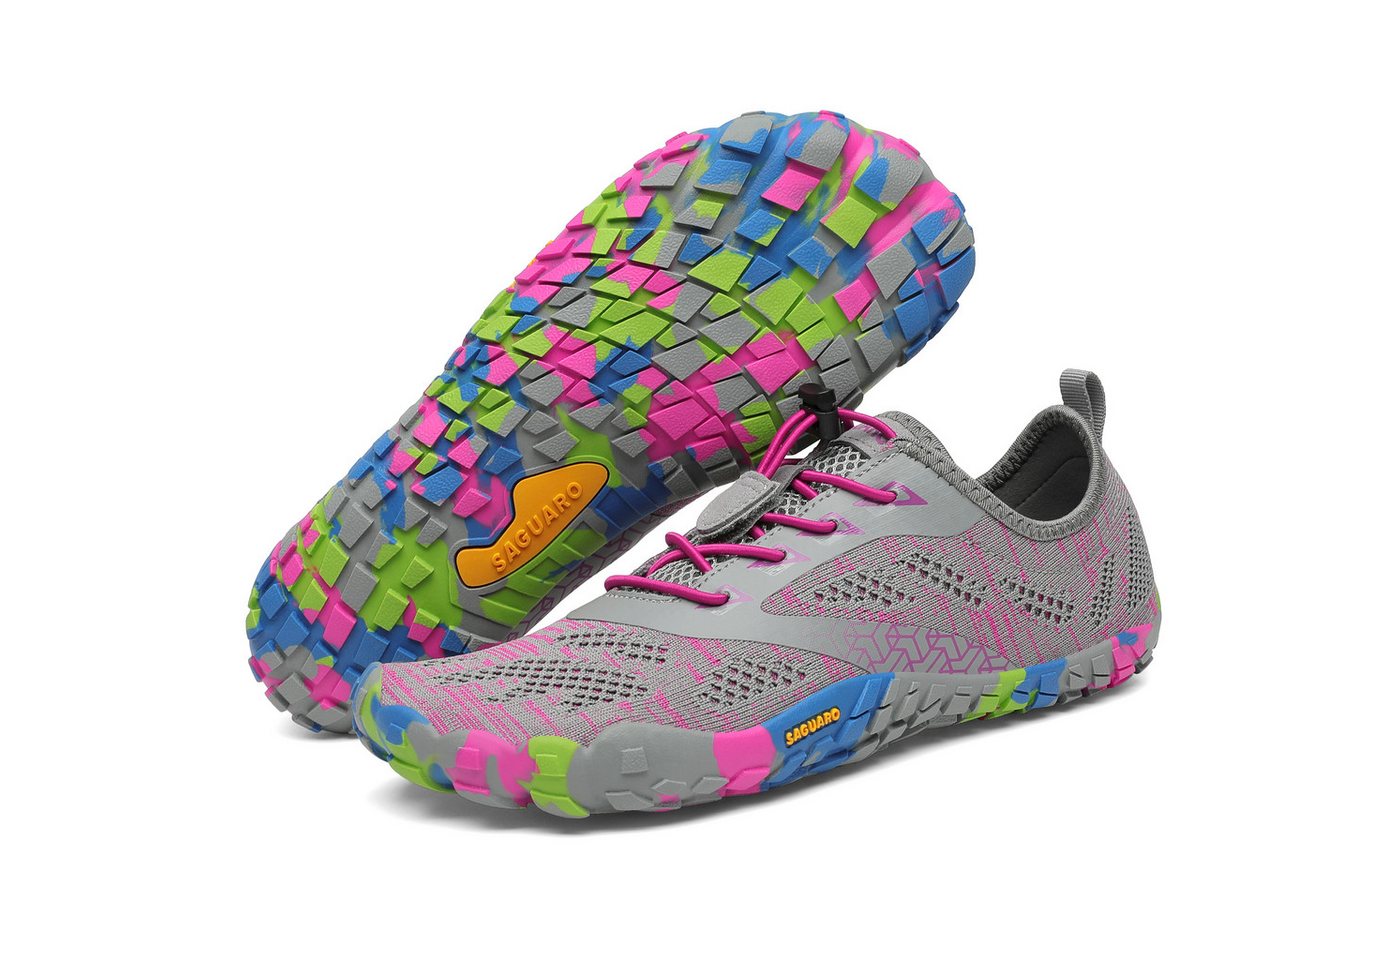 SAGUARO Sport Sommer Barfußschuh (5mm Sohlenstärke, Nullabsatz, bequem, leicht, atmungsaktiv, rutschfest) Minimalschuhe Laufschuhe Sport-Schuhe Jogging Sneaker Trail-Running von SAGUARO